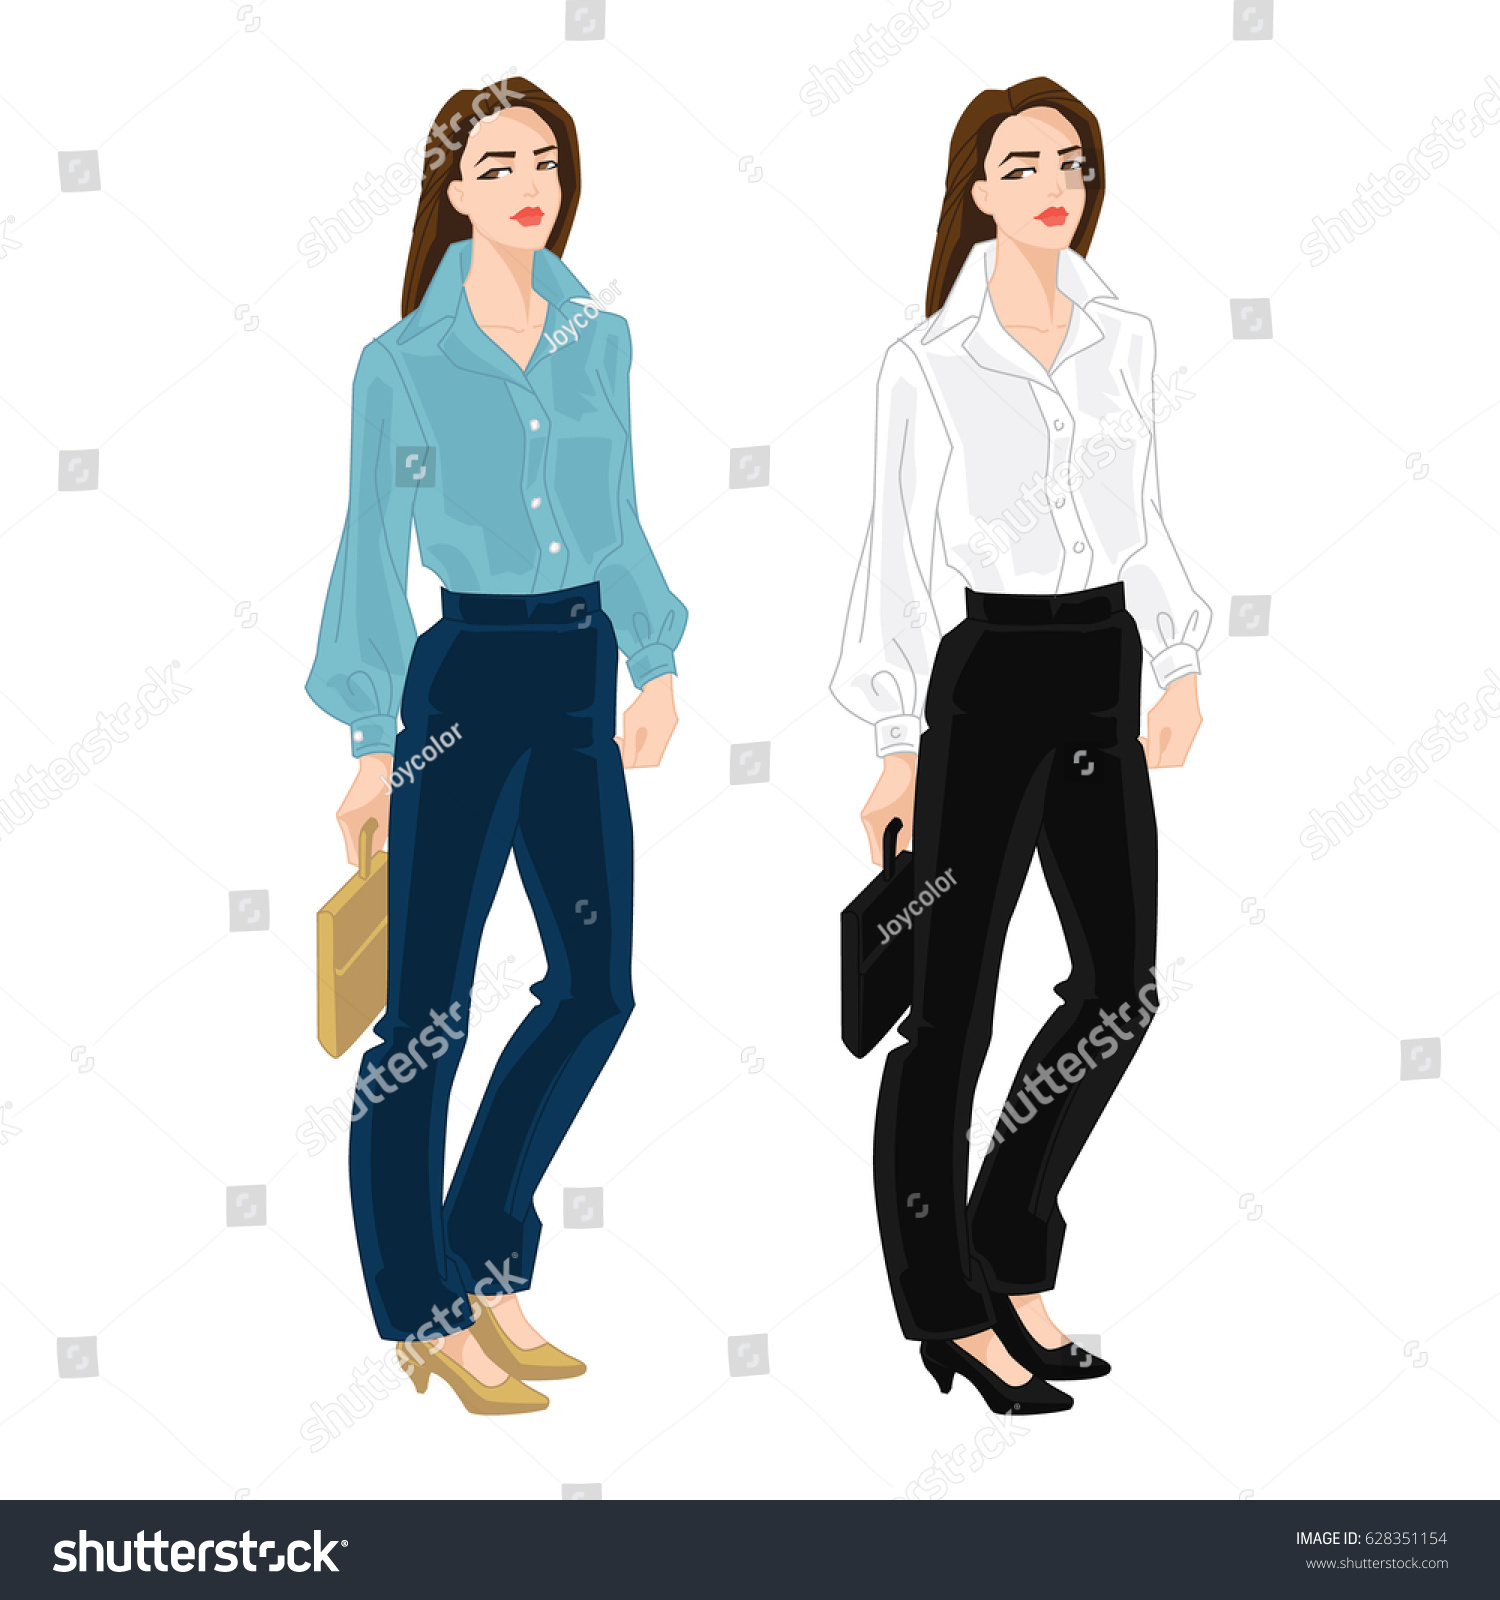 corporate dress code for ladies